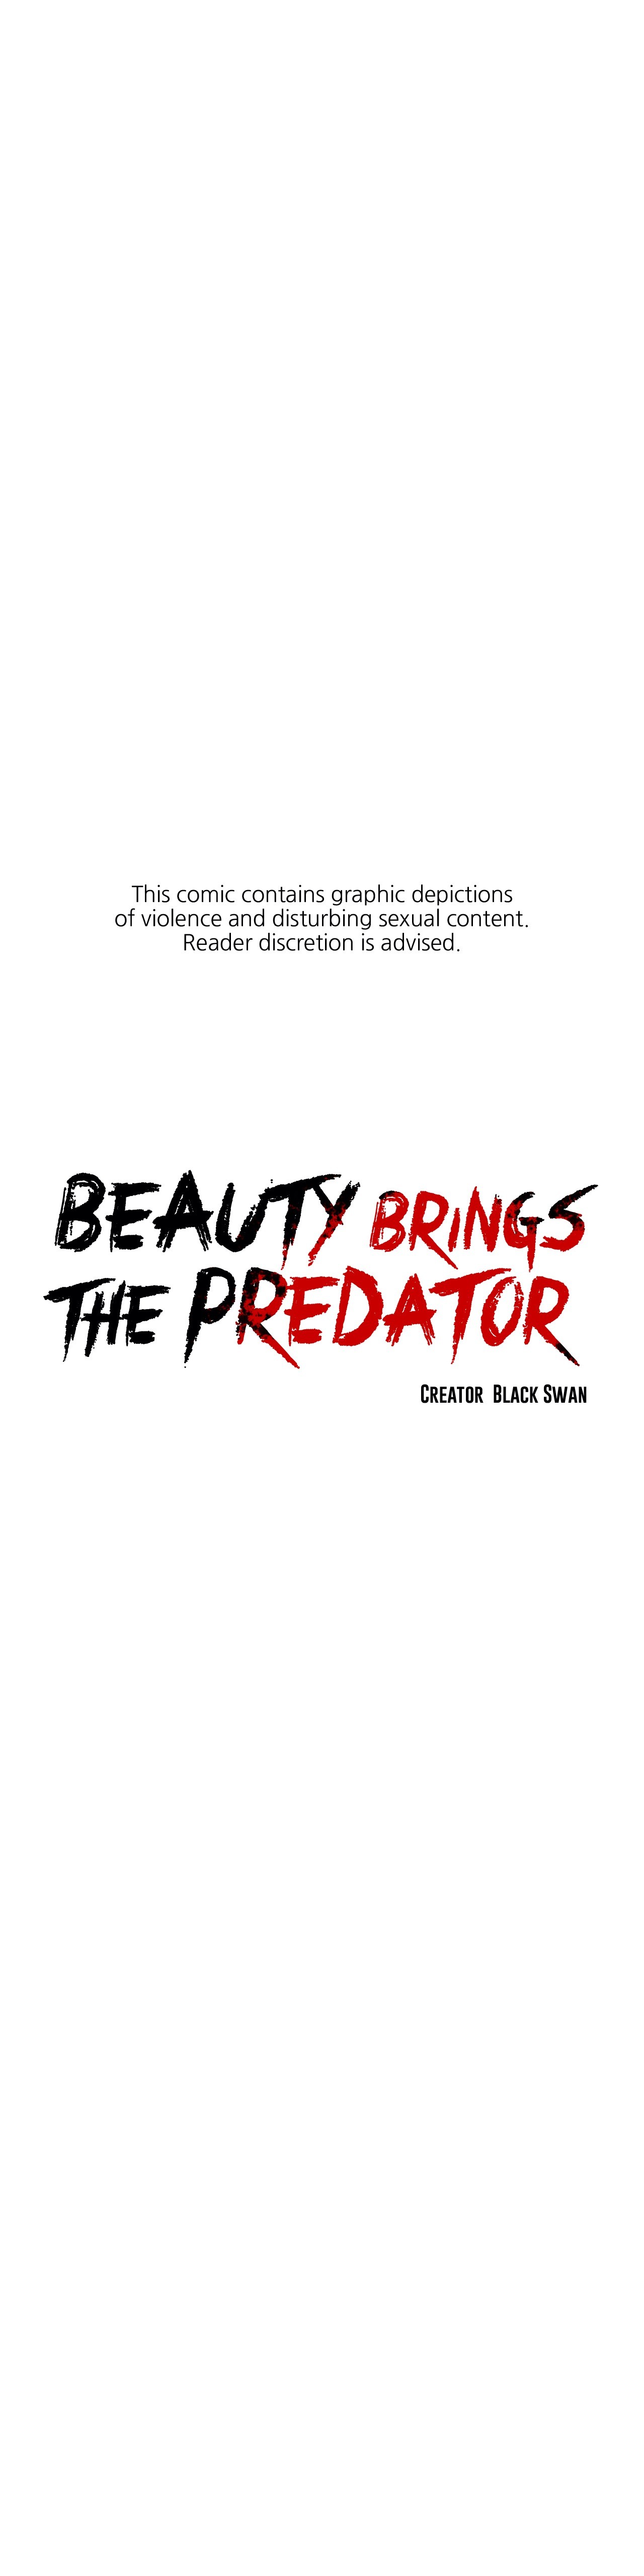 Beauty Brings the Predator image